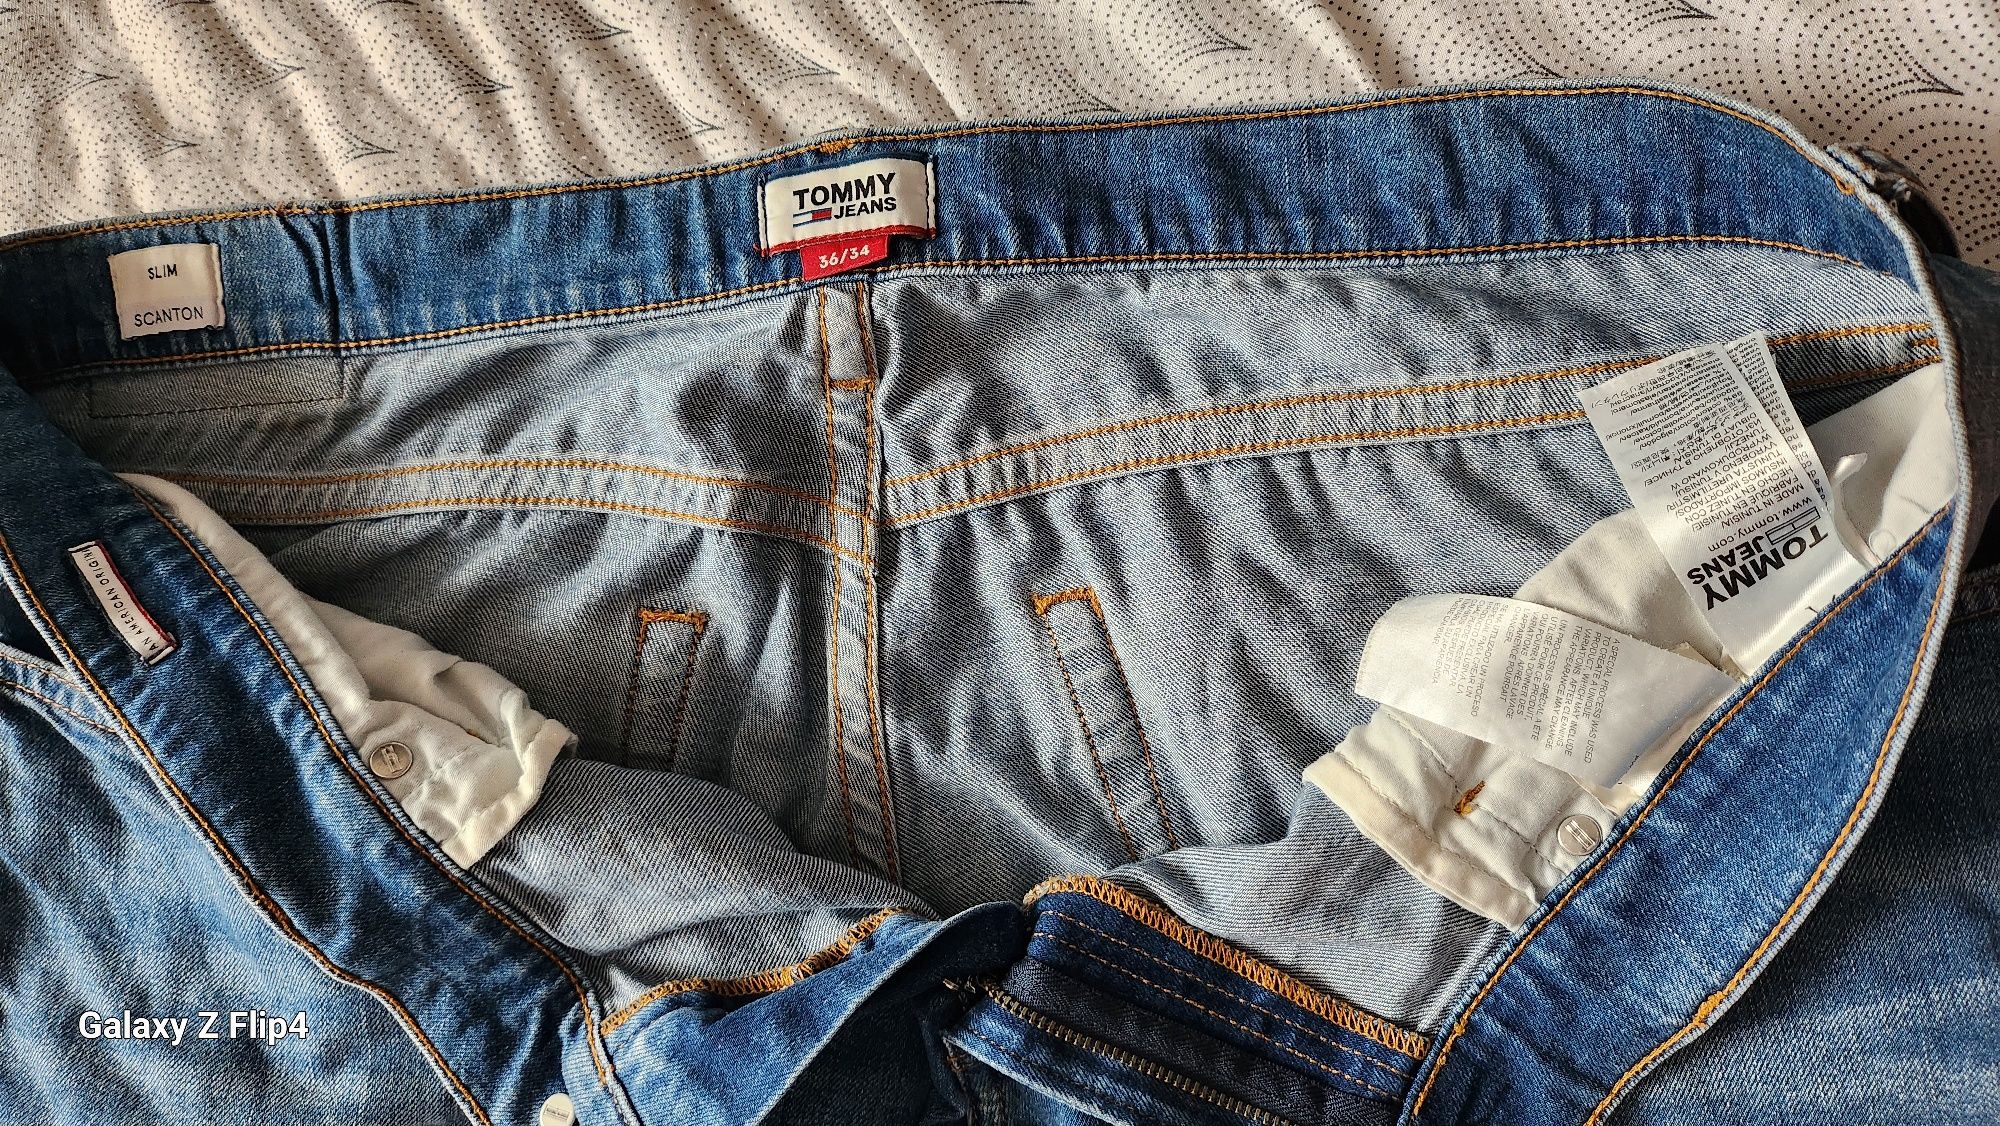 Tommy Hilfiger Jeans Scation 36/34